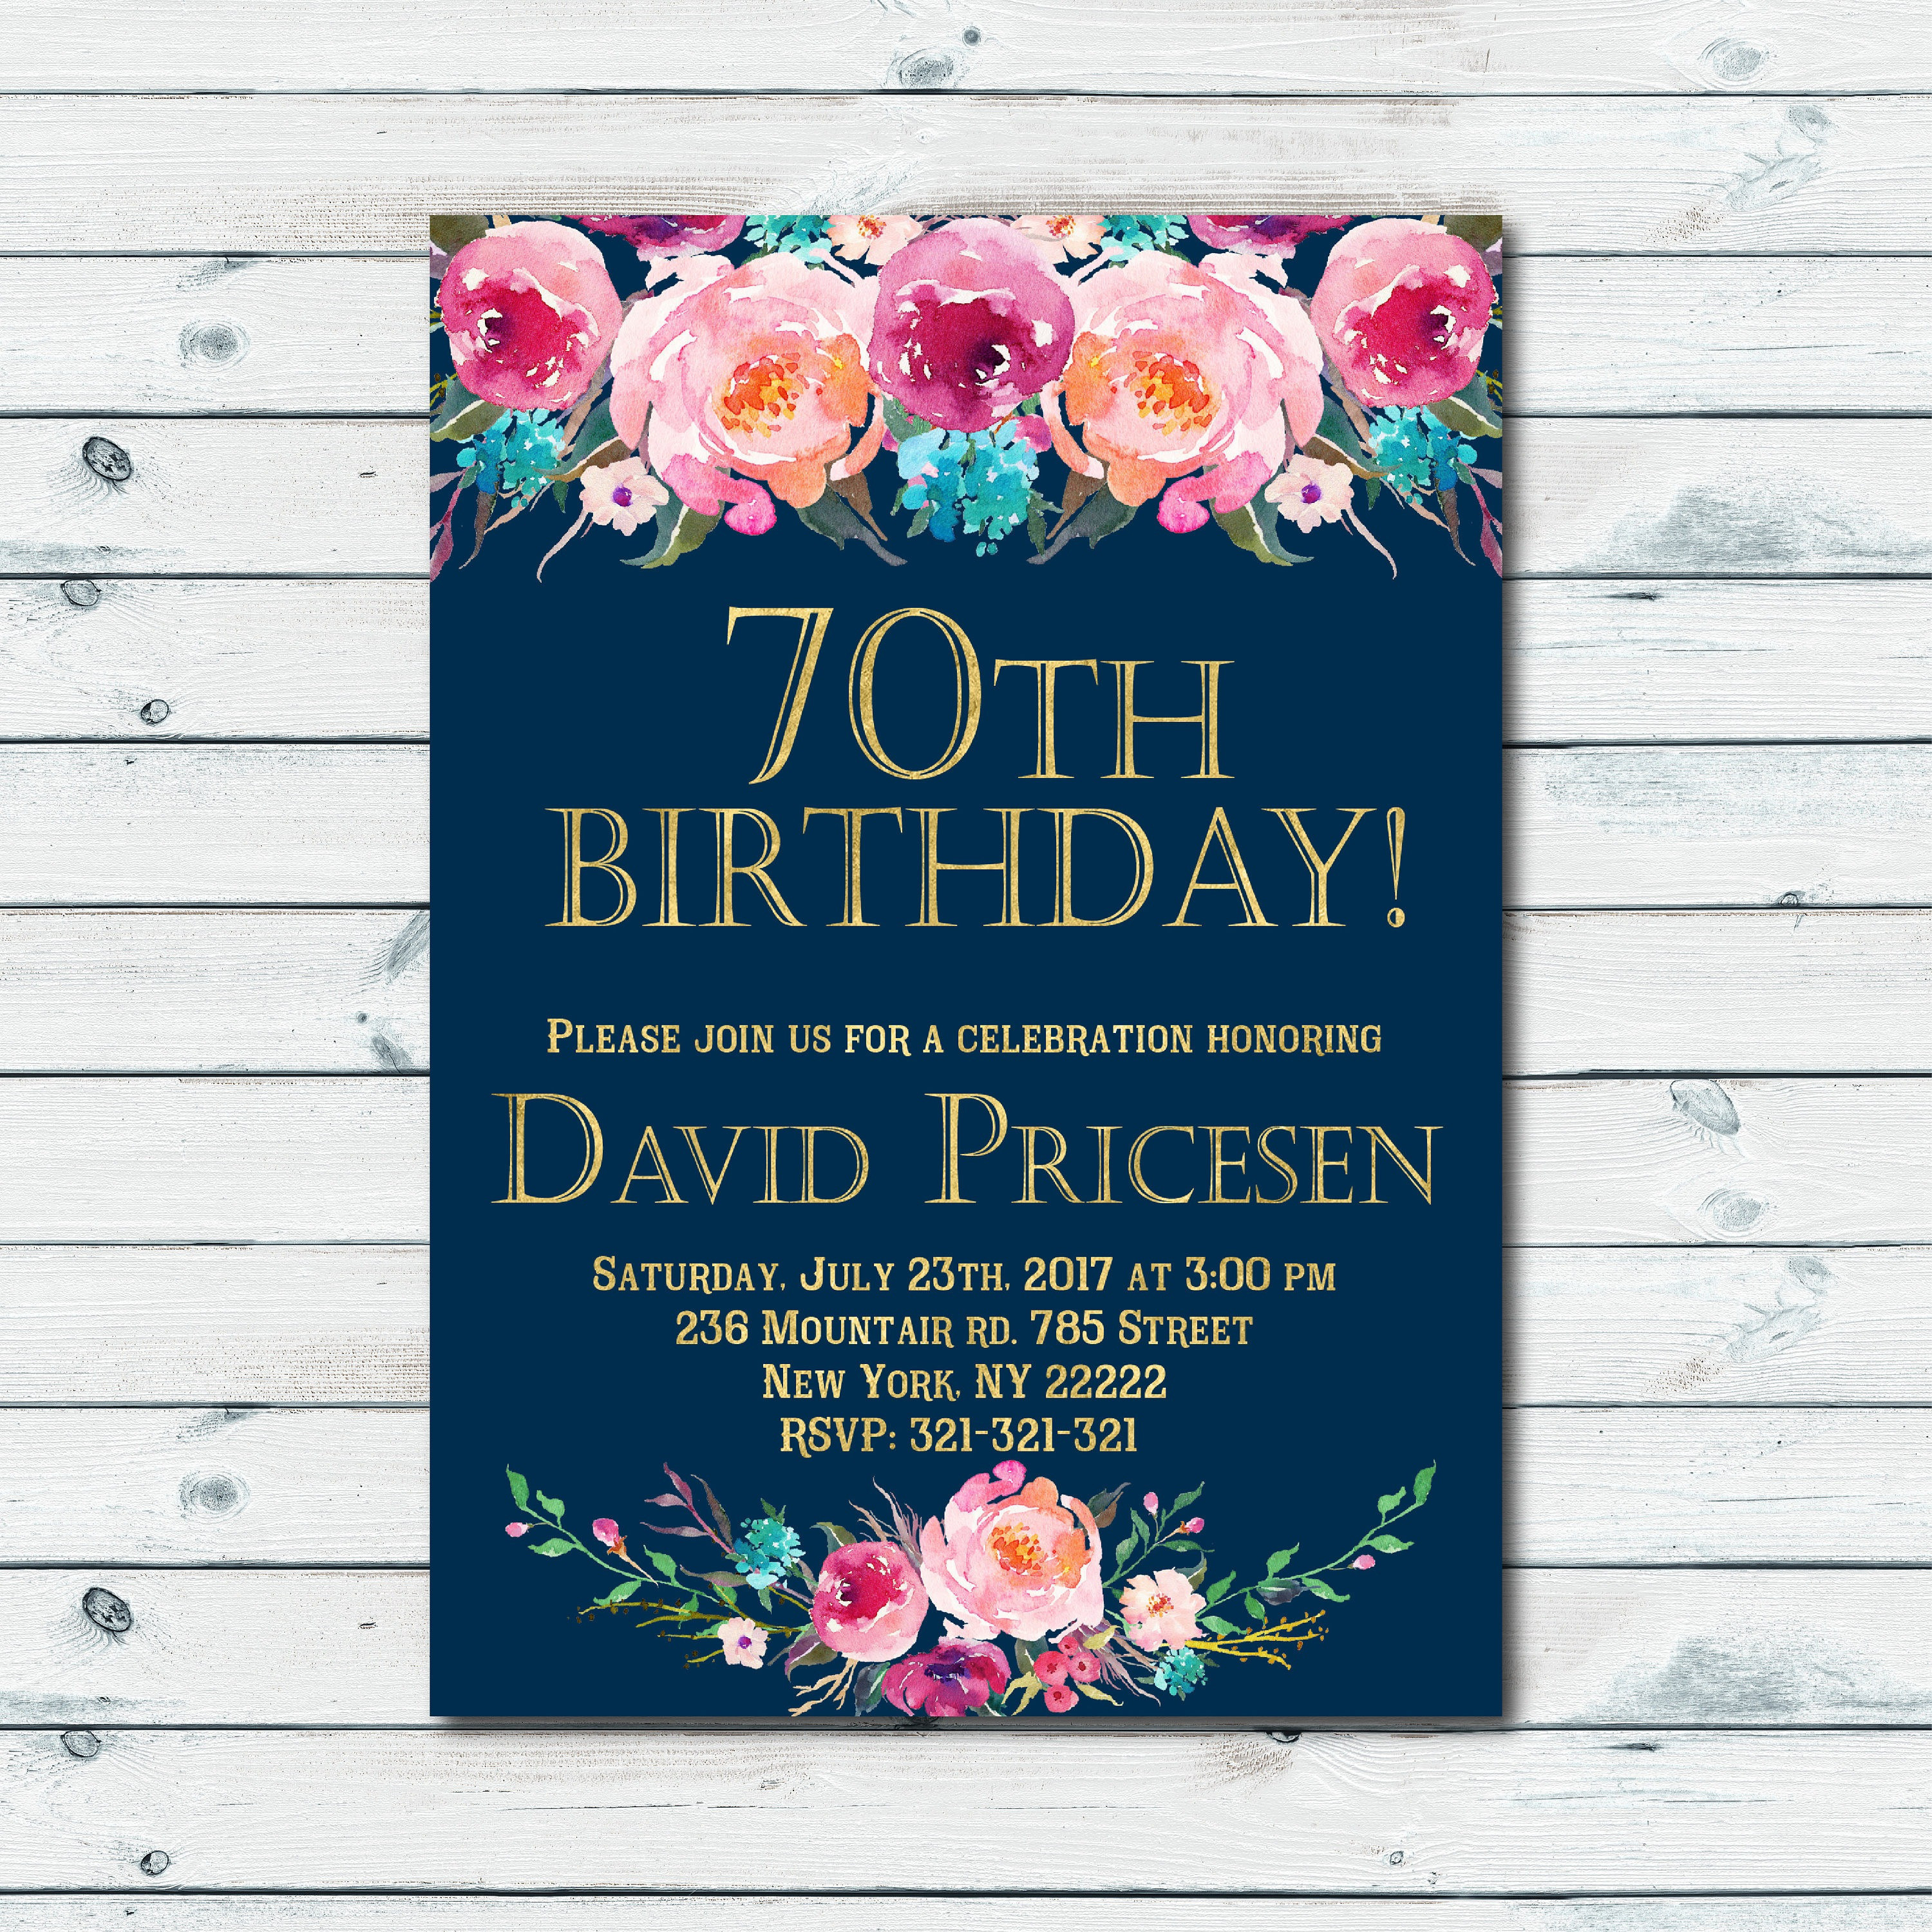 Birthday Card Ideas For Men 21 Birthday Cards Cool Homemade Birthday Cards Unique 21st Birthday